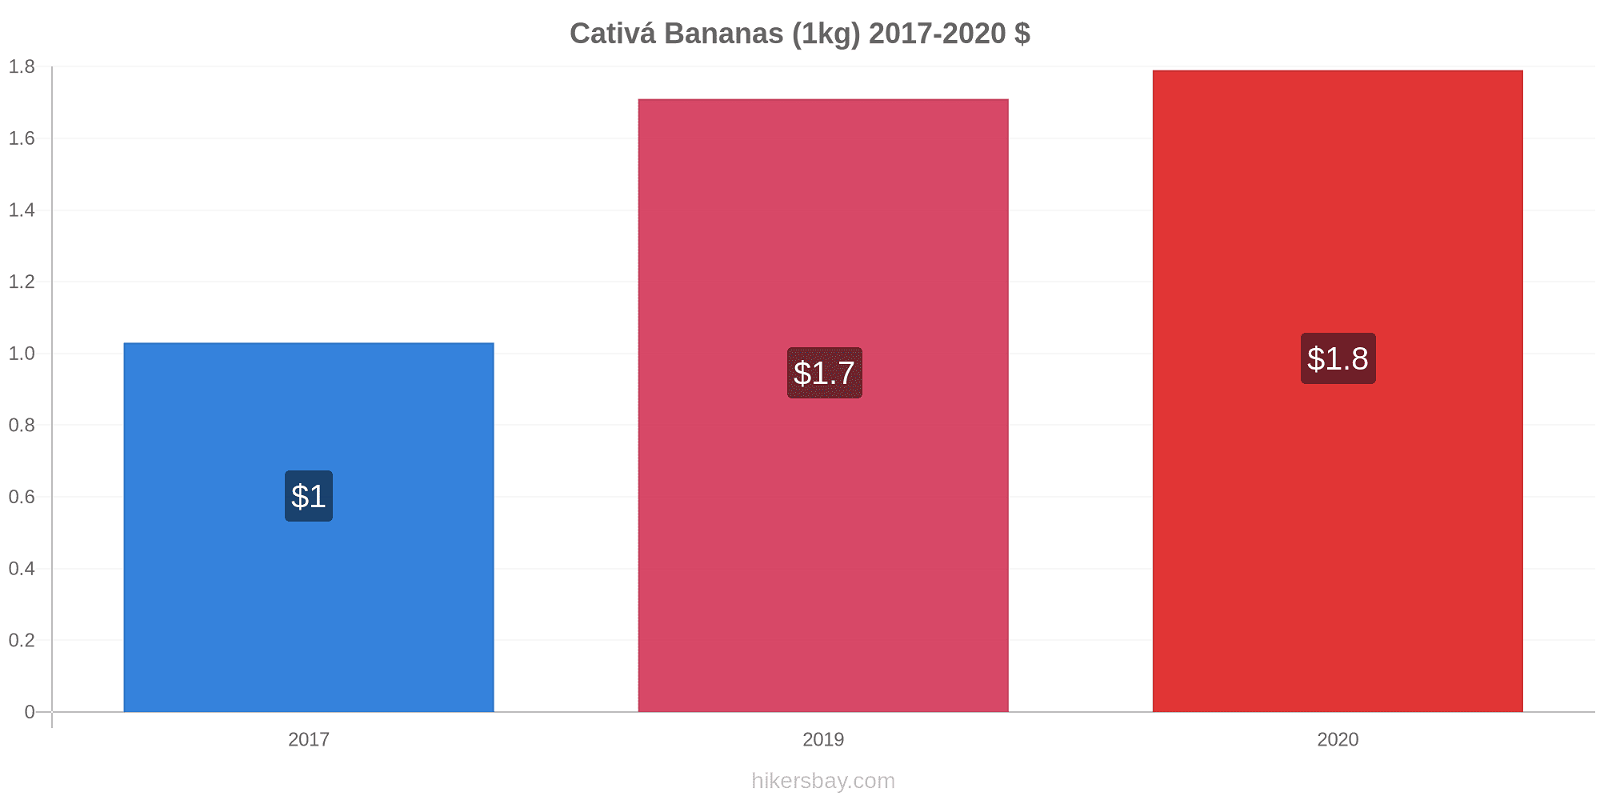 Cativá price changes Bananas (1kg) hikersbay.com